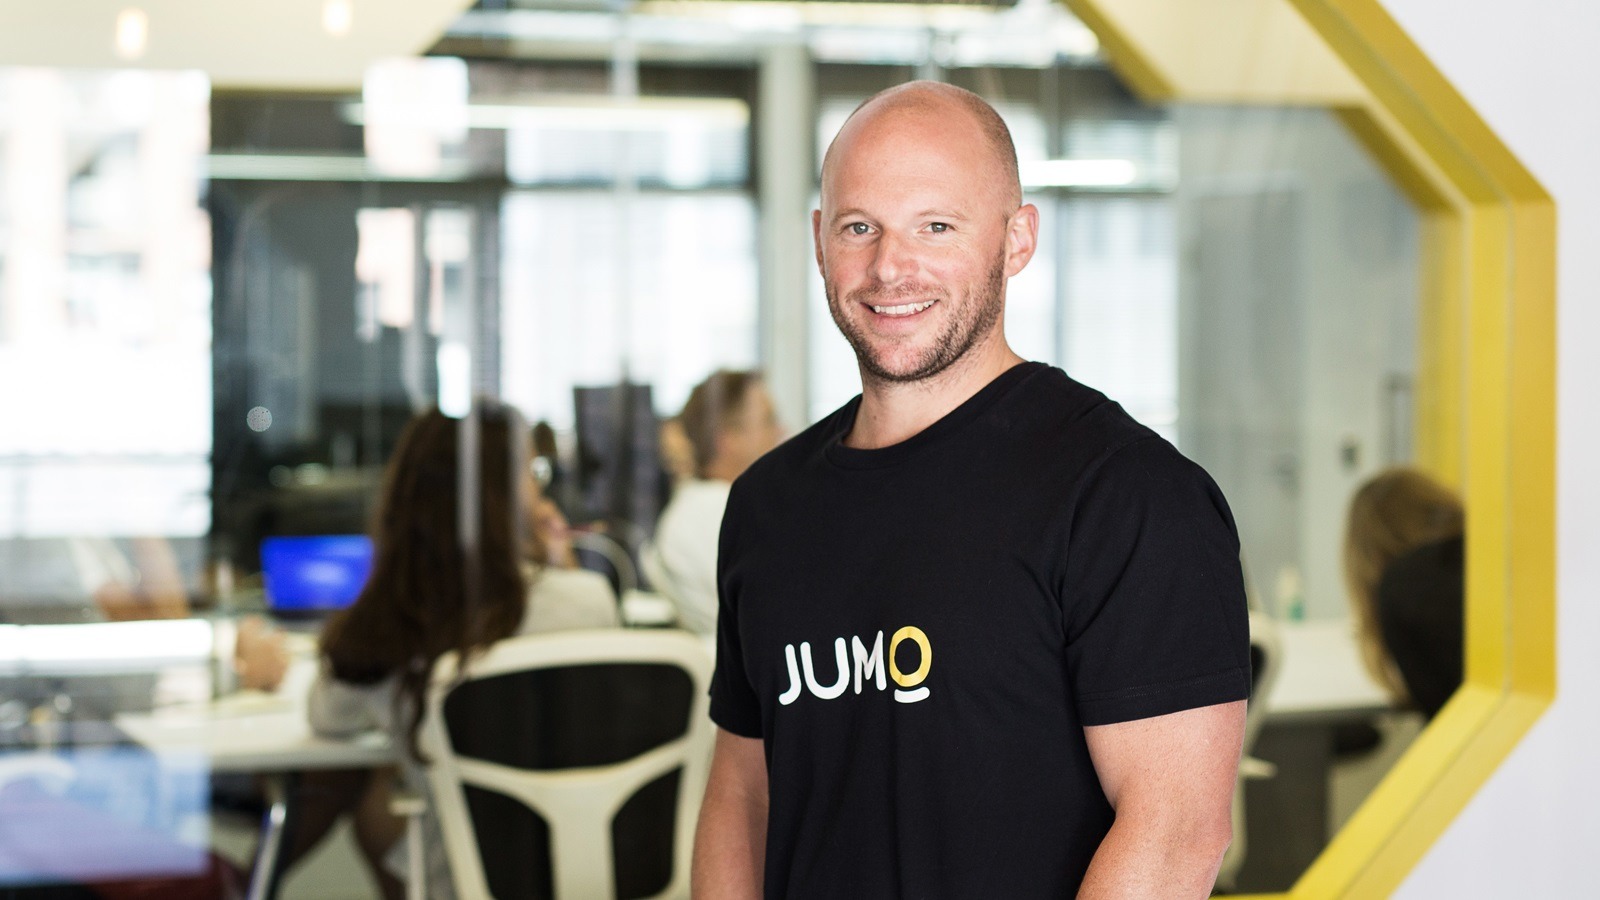 JUMO CEO Andrew Watkins-Ball